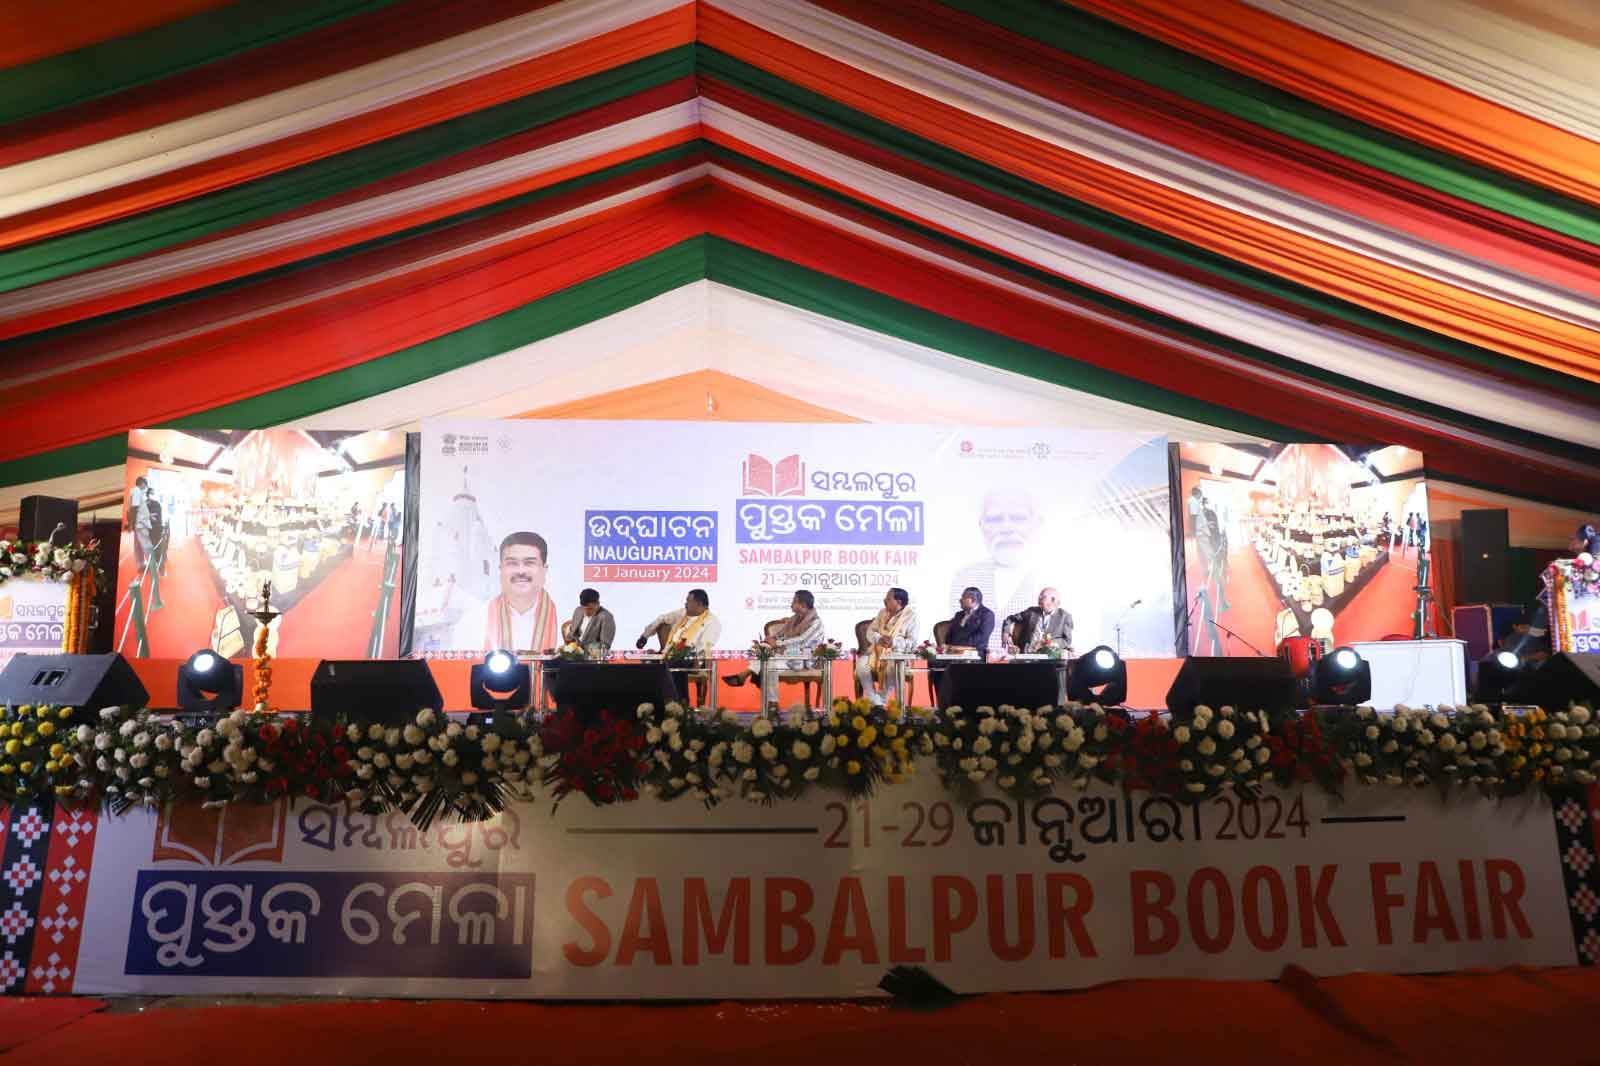 Book Fair Sambalpur